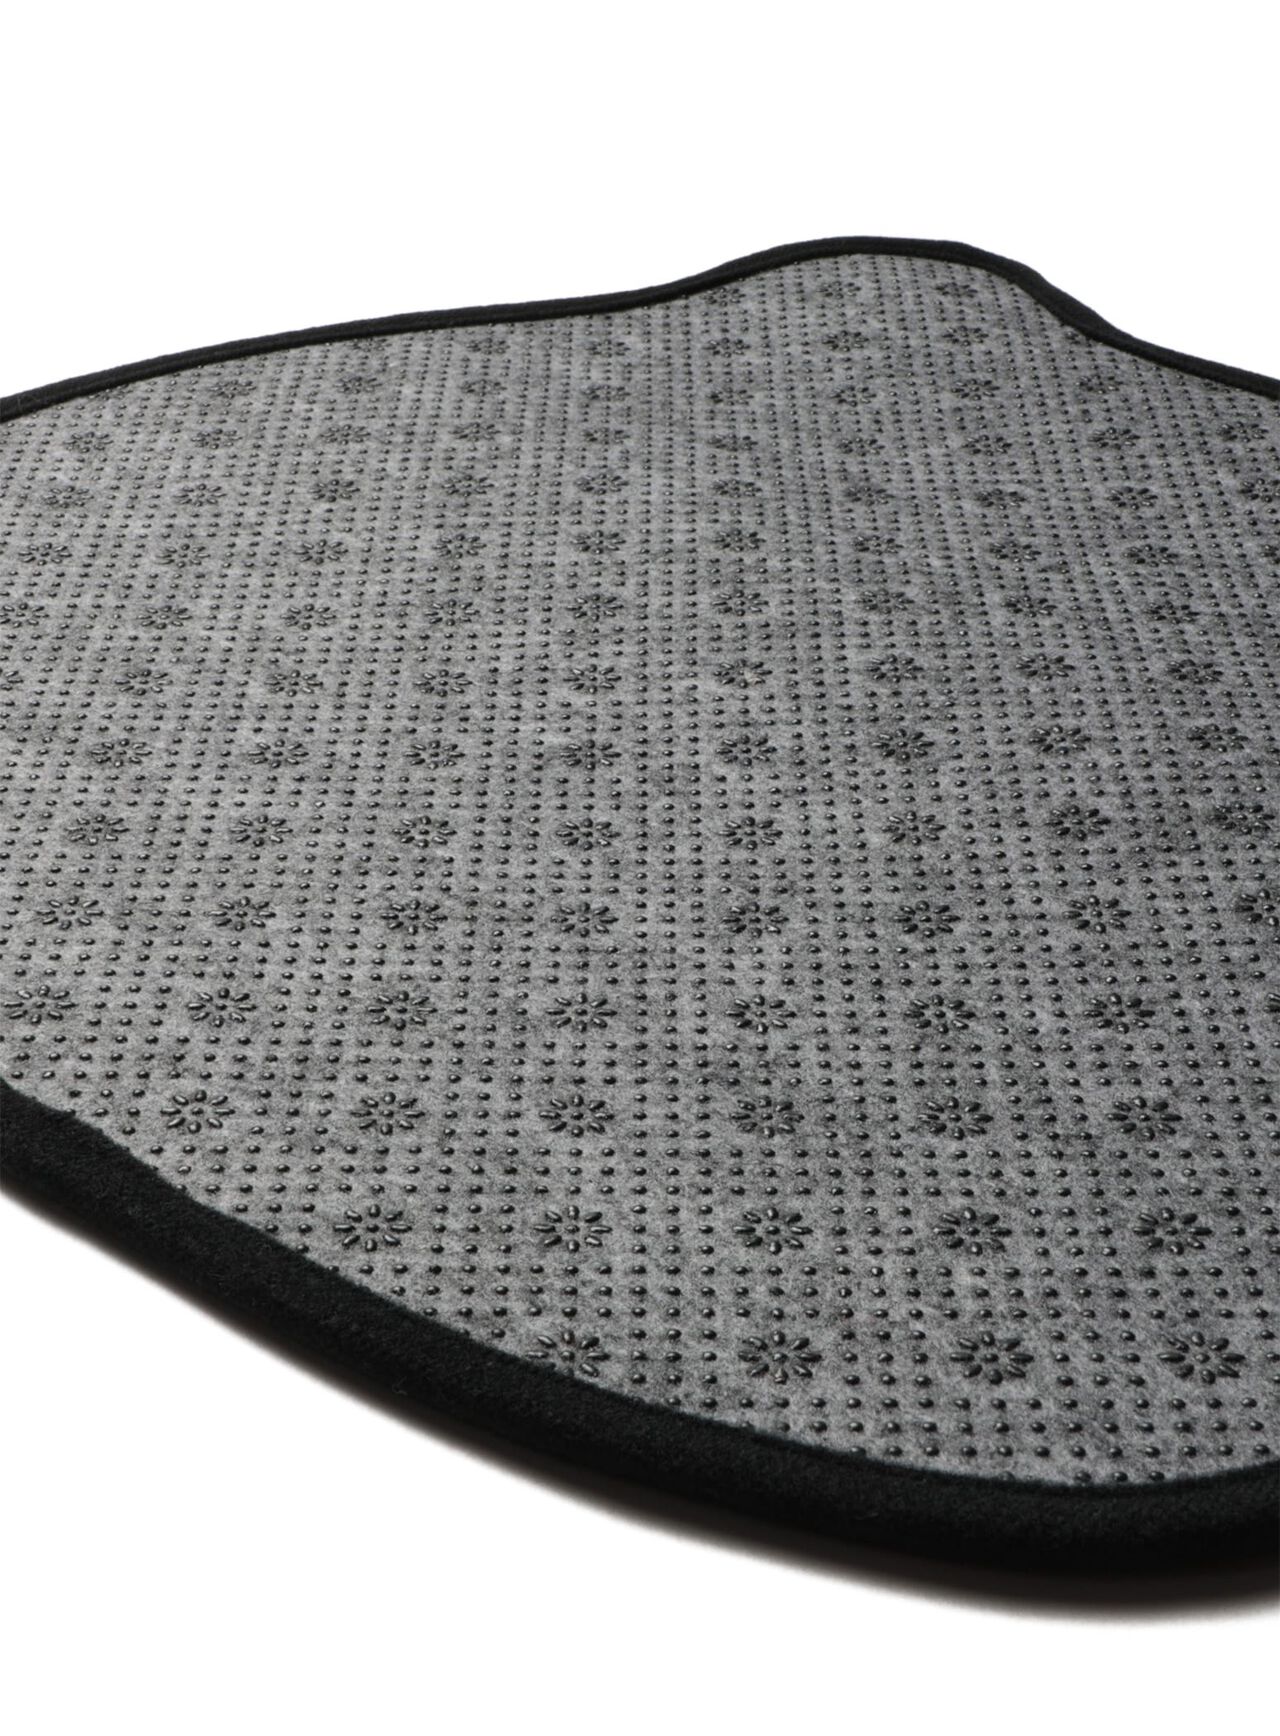 Torachan mini floor mat,ONE, large image number 3